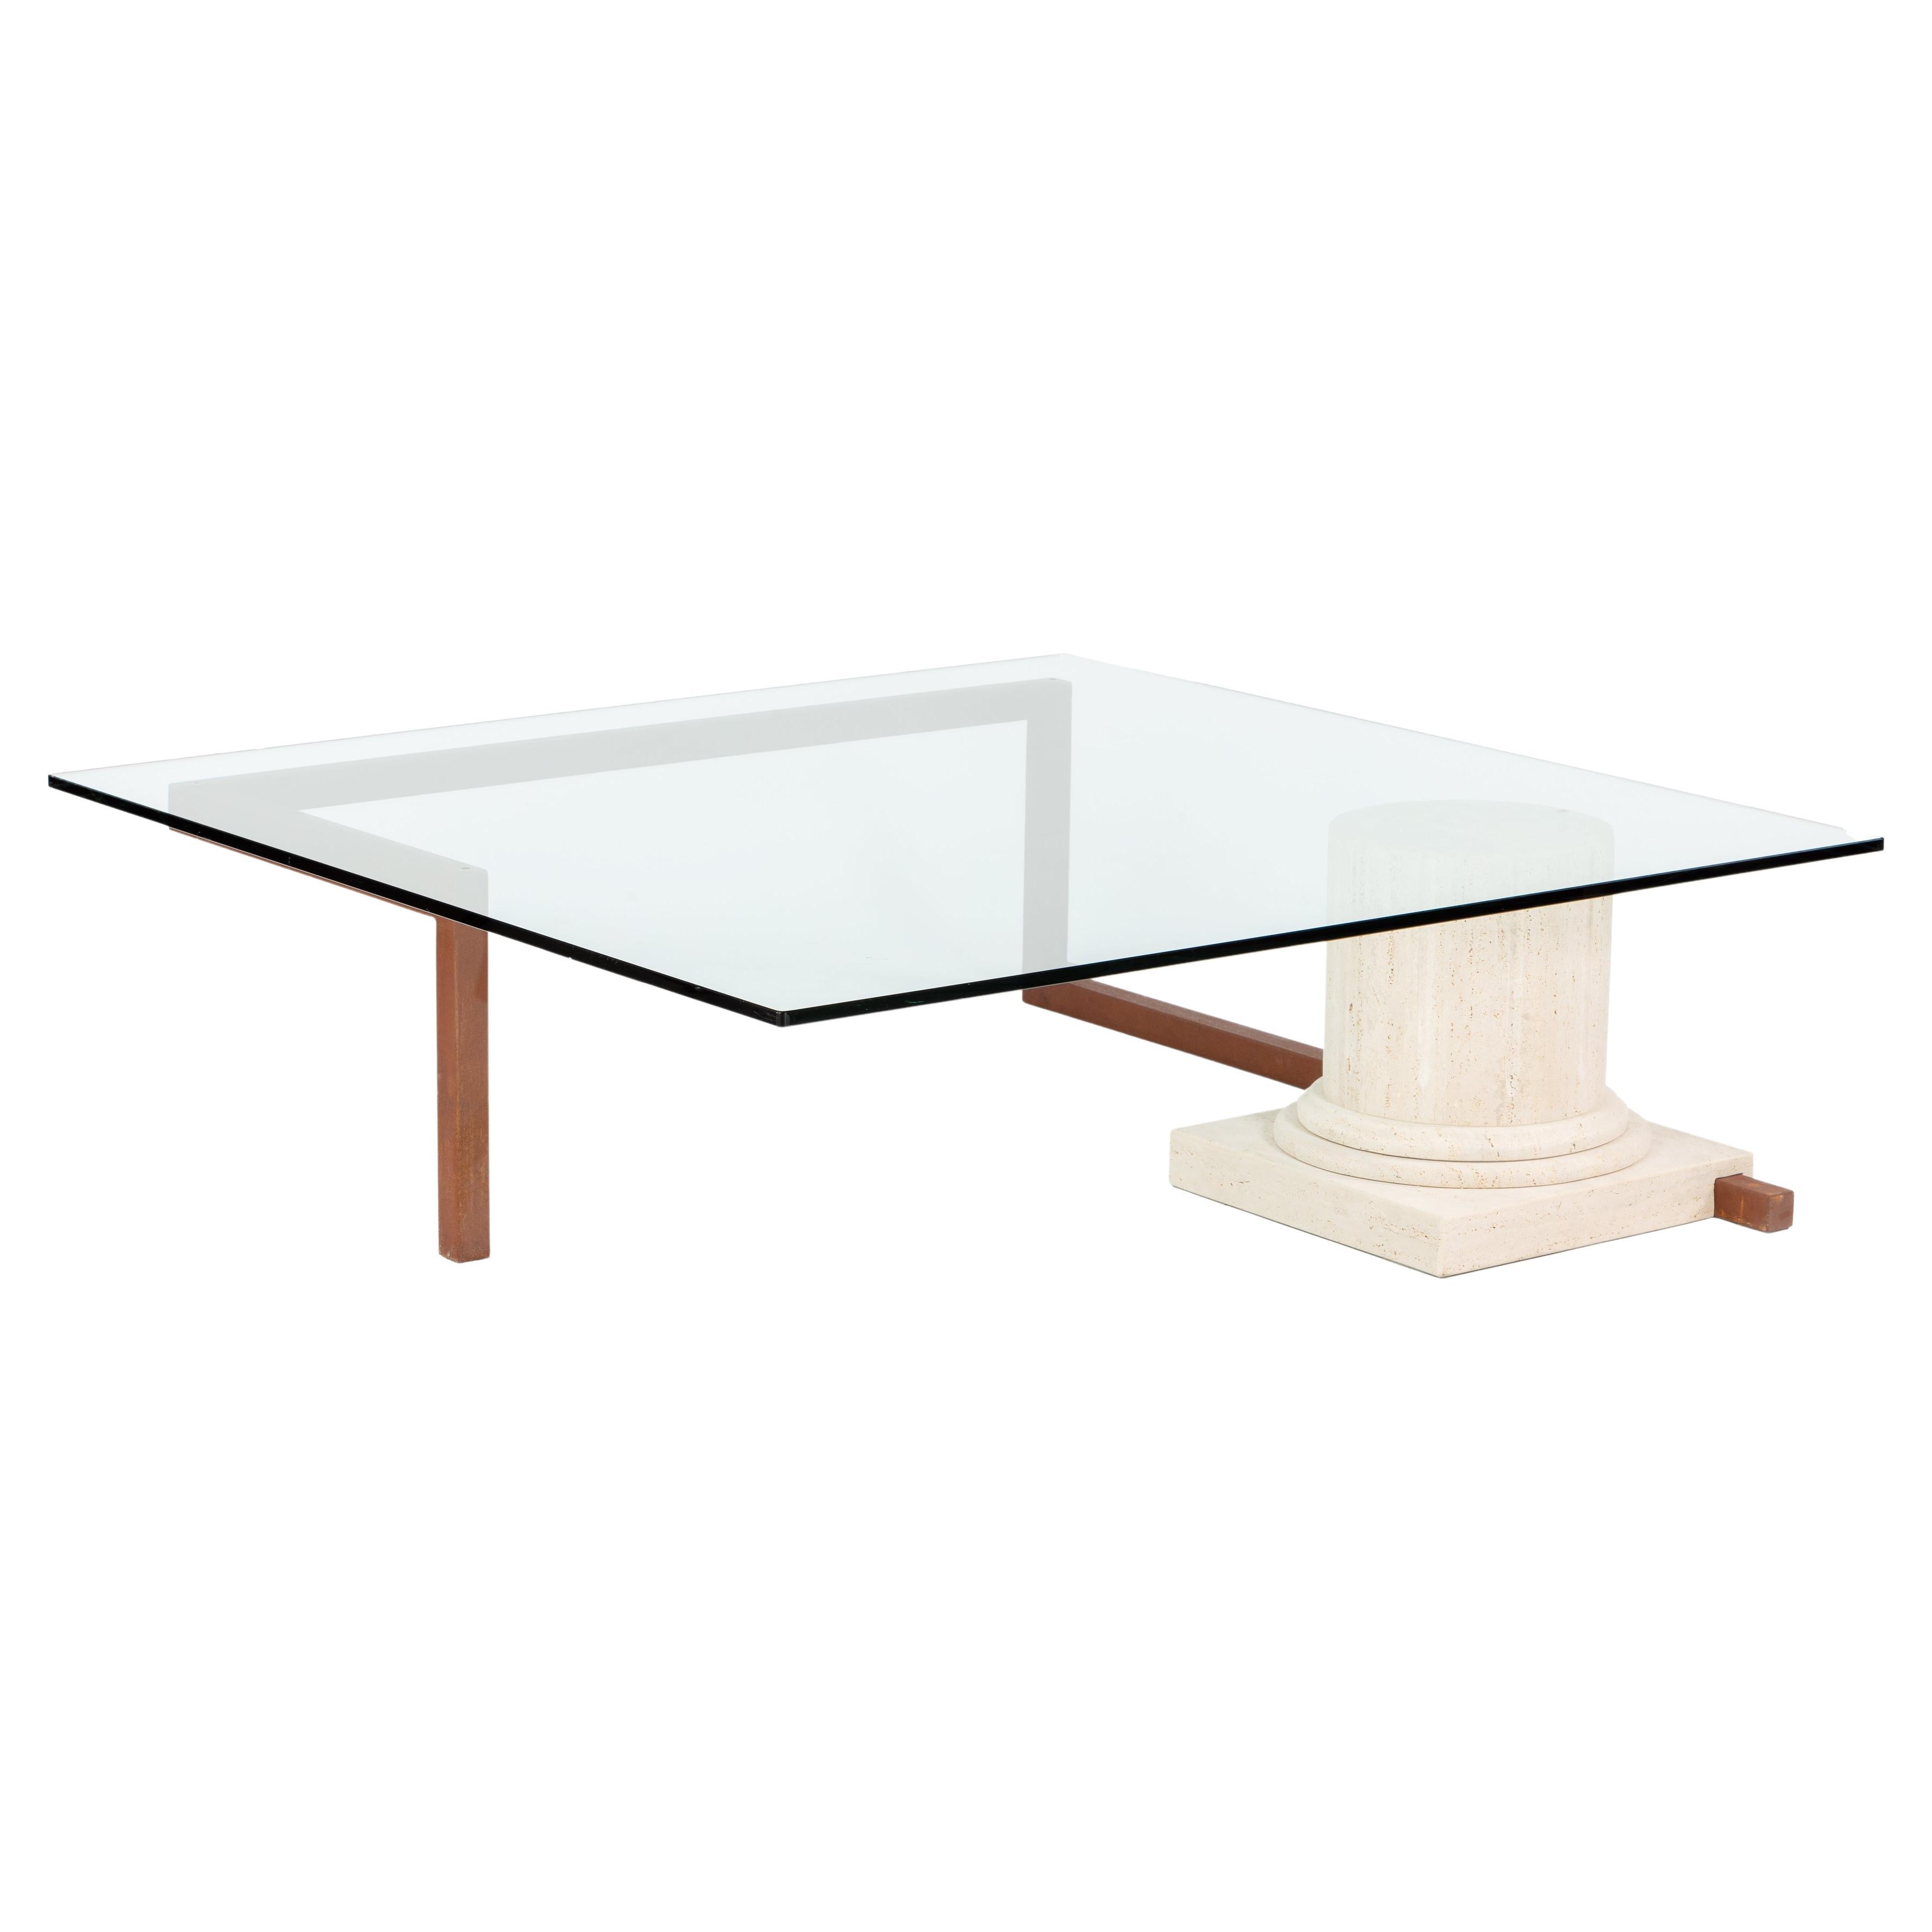 Table basse Sillar en marbre, travertin et fer oxydé, design contemporain de Meddel